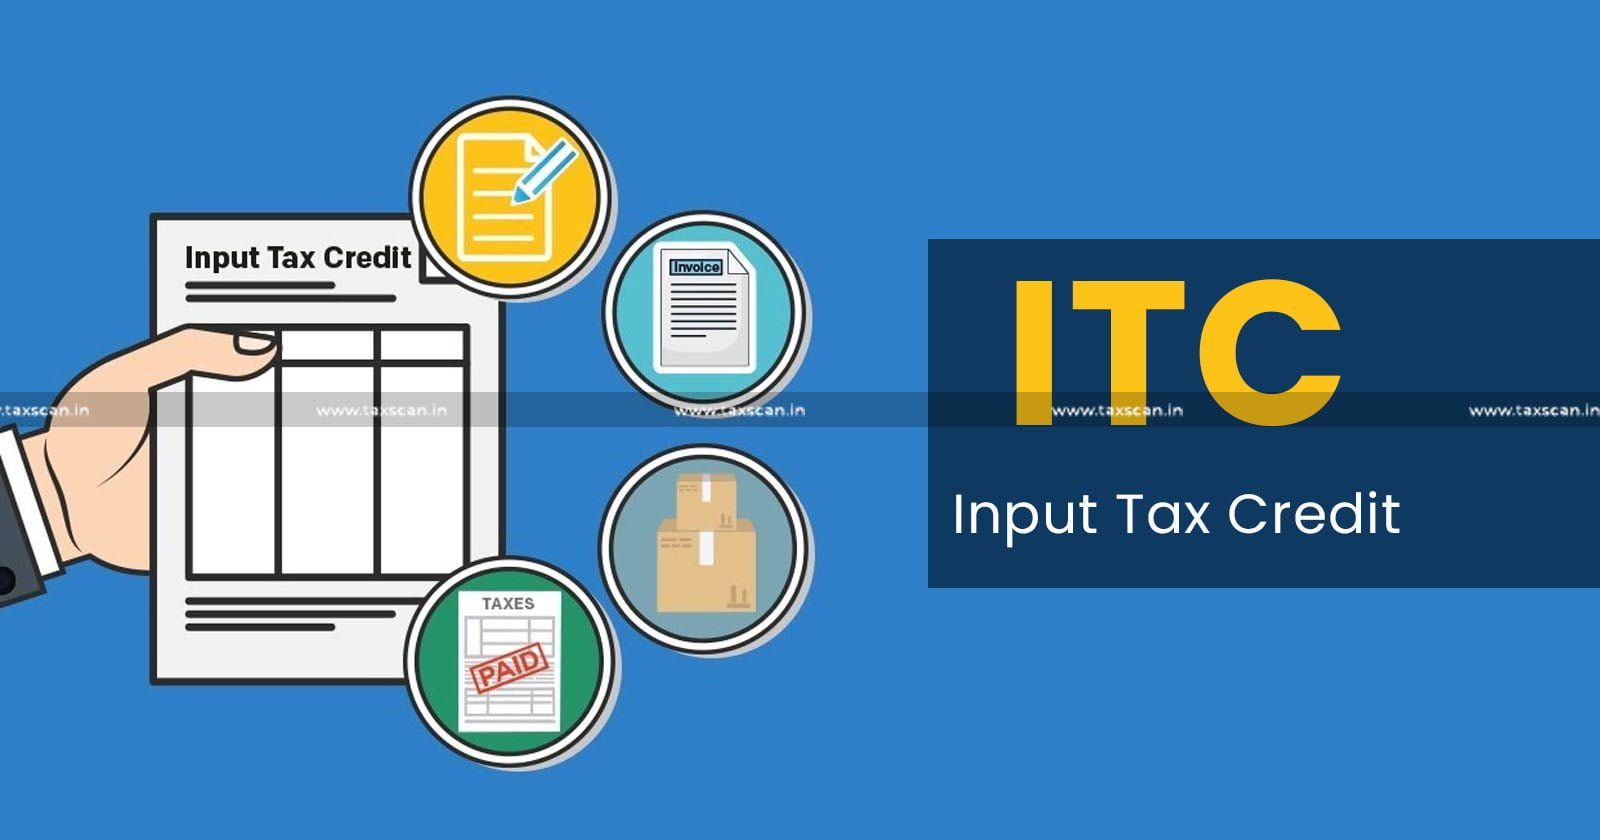 Claim of Excess ITC - improper Calculation - reconciliation - Delhi HC - Re adjudication - taxscan